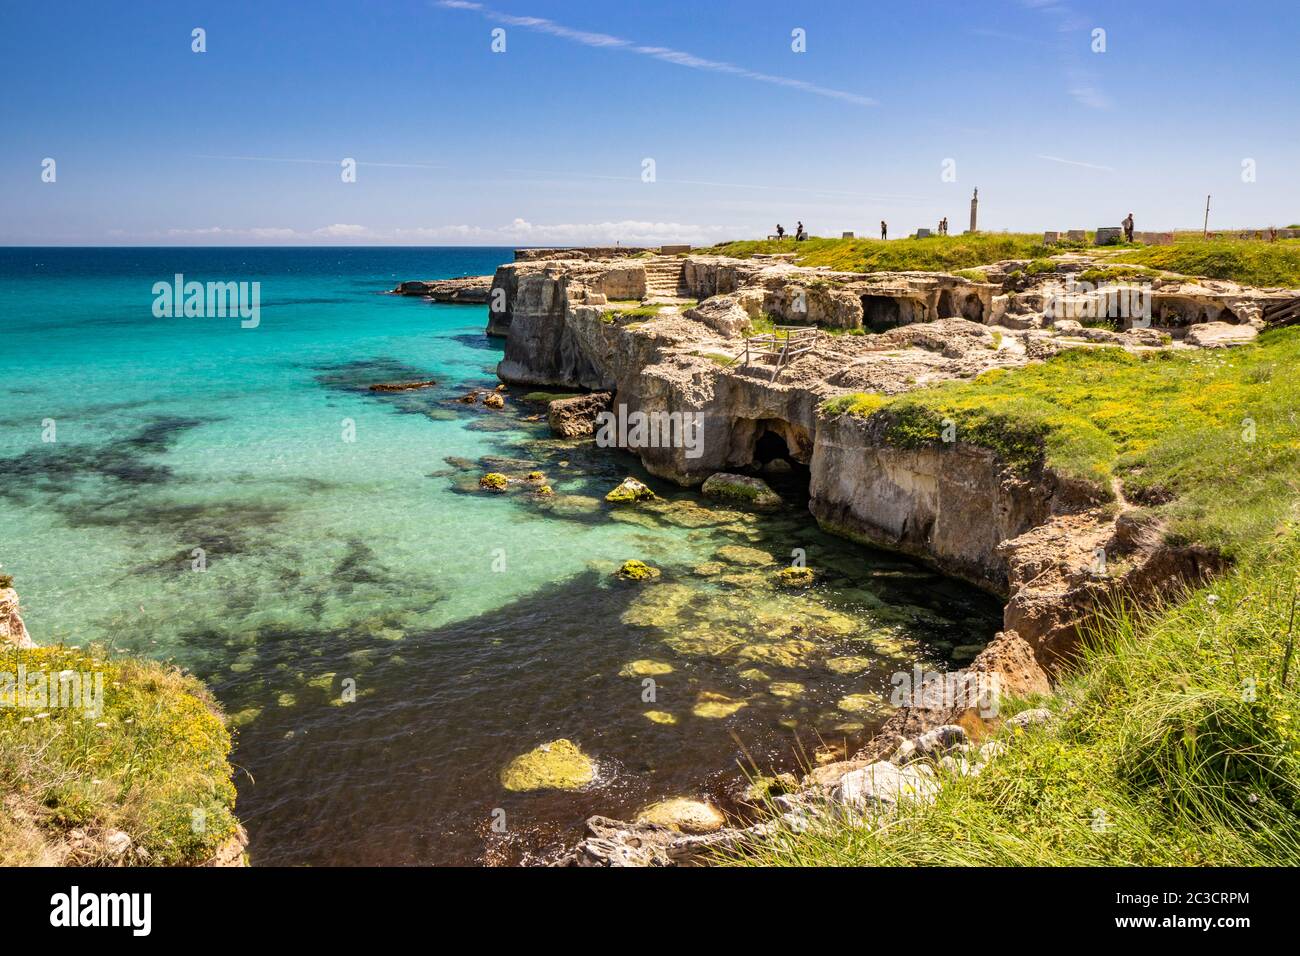 The important archaeological site and tourist resort of Roca Vecchia, in Puglia, Salento, Italy. Turquoise sea, blue sky, rocks, sun, lush vegetation Stock Photo